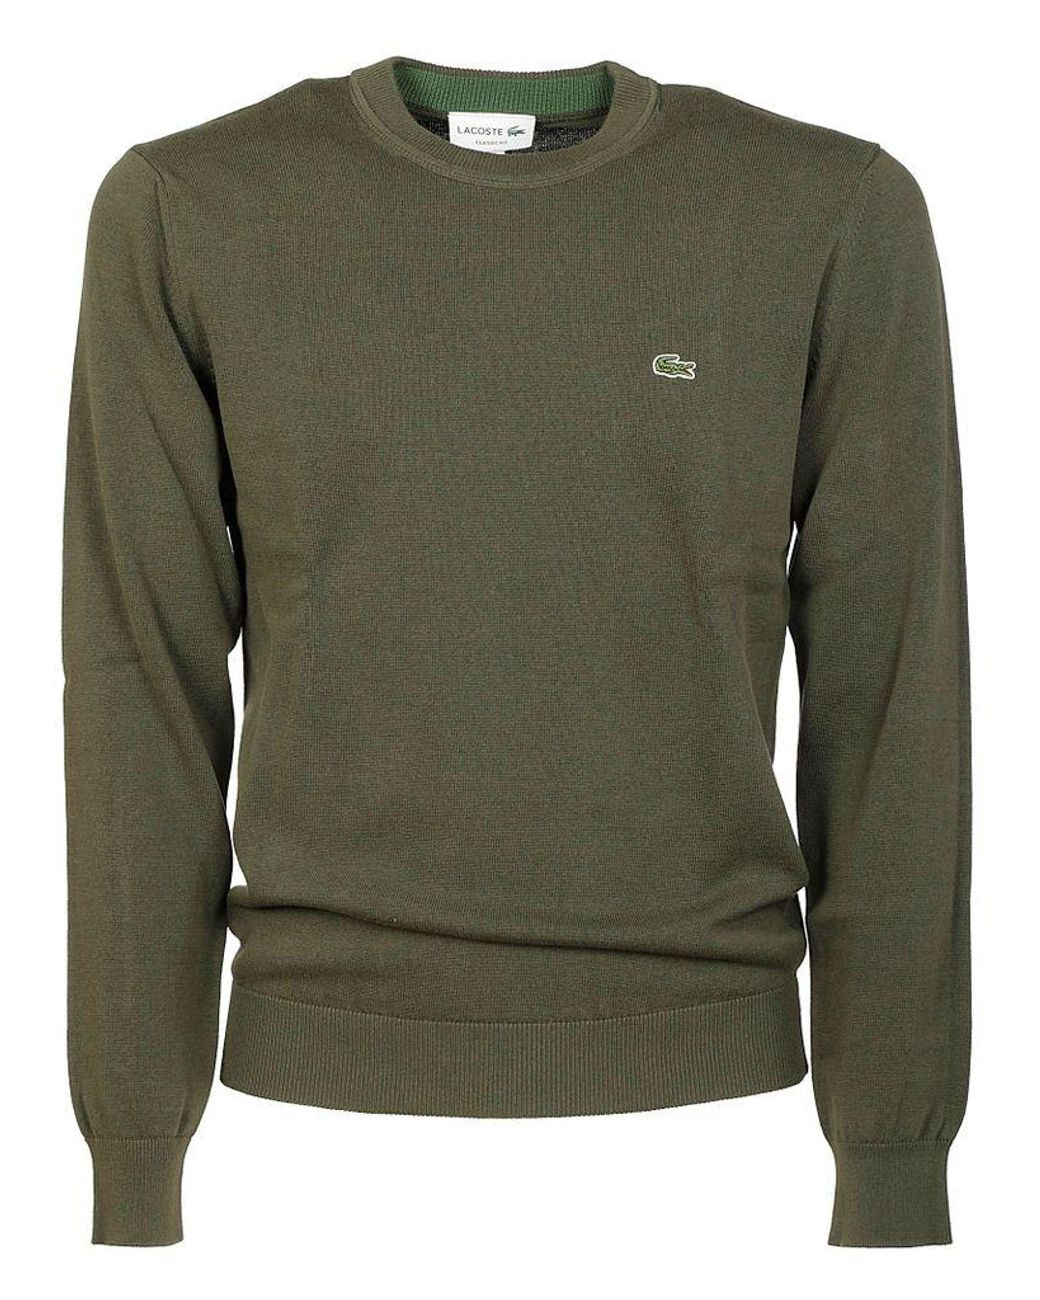 Lacoste Sweaters in Green for Men - Lyst